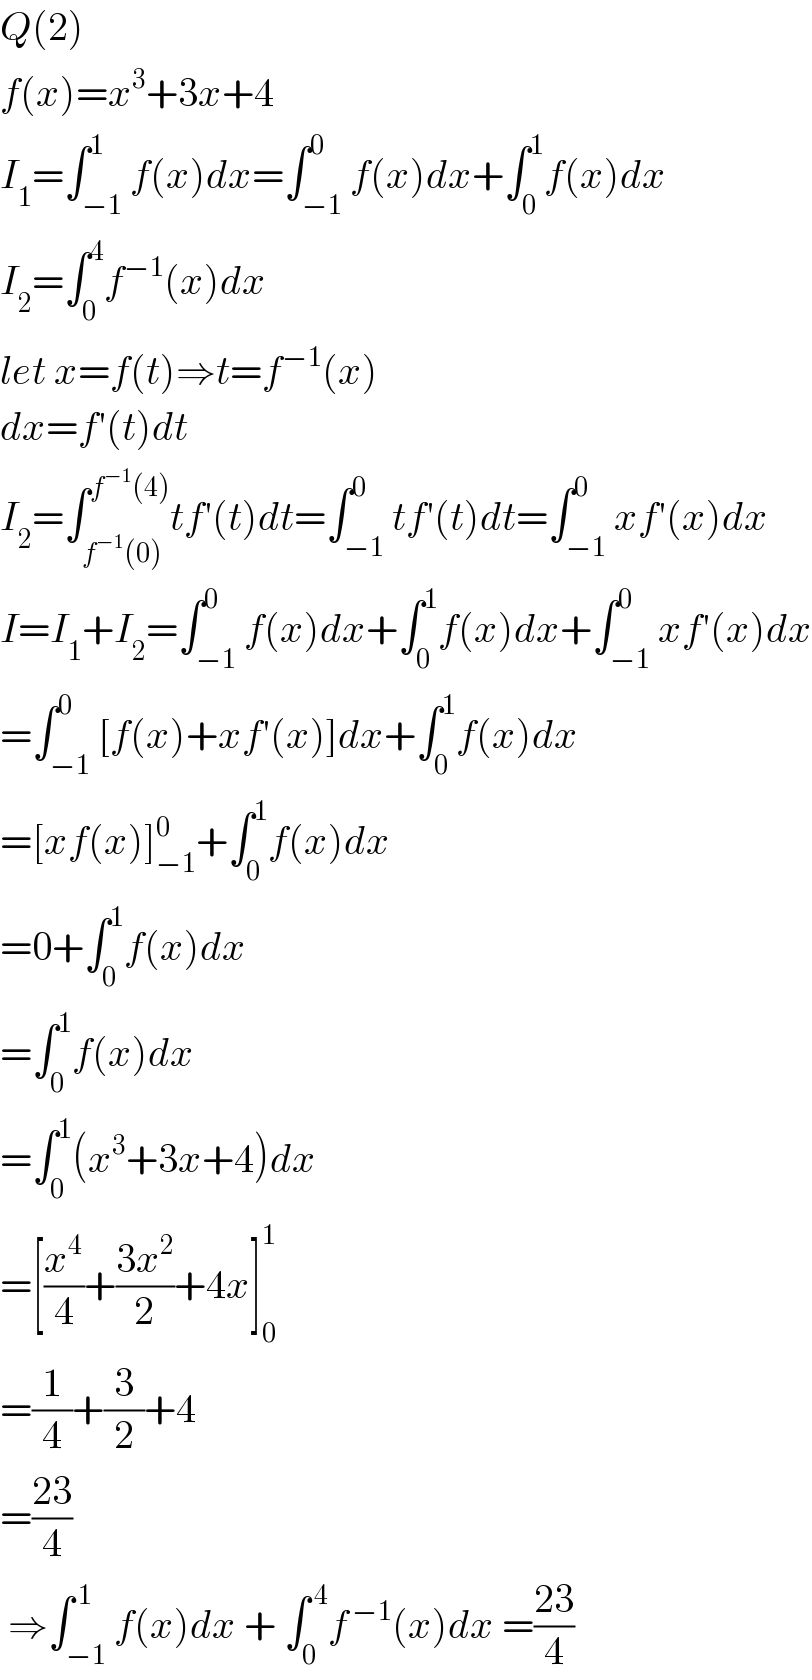 Q(2)  f(x)=x^3 +3x+4  I_1 =∫_(−1) ^1 f(x)dx=∫_(−1) ^0 f(x)dx+∫_0 ^1 f(x)dx  I_2 =∫_0 ^4 f^(−1) (x)dx  let x=f(t)⇒t=f^(−1) (x)  dx=f′(t)dt  I_2 =∫_(f^(−1) (0)) ^(f^(−1) (4)) tf′(t)dt=∫_(−1) ^0 tf′(t)dt=∫_(−1) ^0 xf′(x)dx  I=I_1 +I_2 =∫_(−1) ^0 f(x)dx+∫_0 ^1 f(x)dx+∫_(−1) ^0 xf′(x)dx  =∫_(−1) ^0 [f(x)+xf′(x)]dx+∫_0 ^1 f(x)dx  =[xf(x)]_(−1) ^0 +∫_0 ^1 f(x)dx  =0+∫_0 ^1 f(x)dx  =∫_0 ^1 f(x)dx  =∫_0 ^1 (x^3 +3x+4)dx  =[(x^4 /4)+((3x^2 )/2)+4x]_0 ^1   =(1/4)+(3/2)+4  =((23)/4)   ⇒∫_(−1) ^( 1) f(x)dx + ∫_0 ^( 4) f^( −1) (x)dx =((23)/4)  